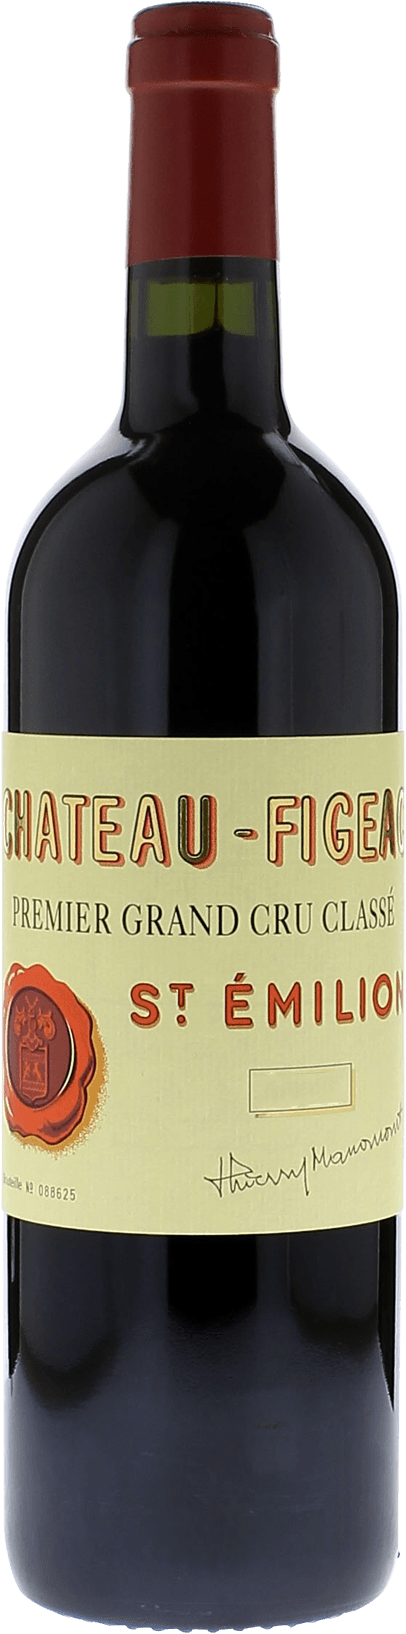 Figeac 1983 1er Grand cru B class Saint-Emilion, Bordeaux rouge